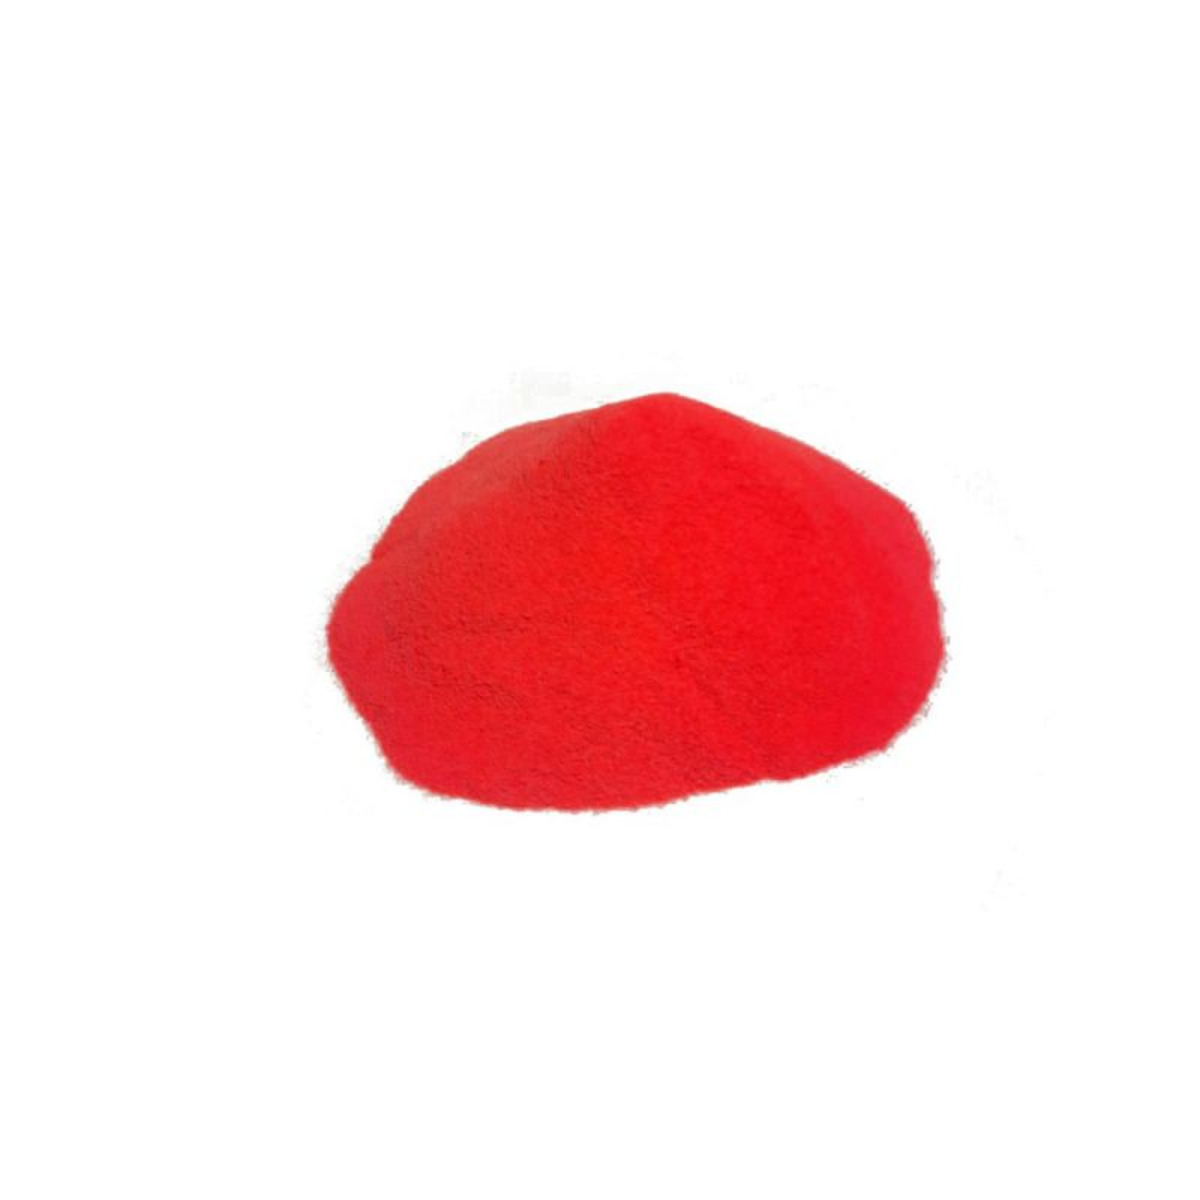 M2 Fishing Plastgum Powder Plasticizer For Ballast -  Red - 100 g        